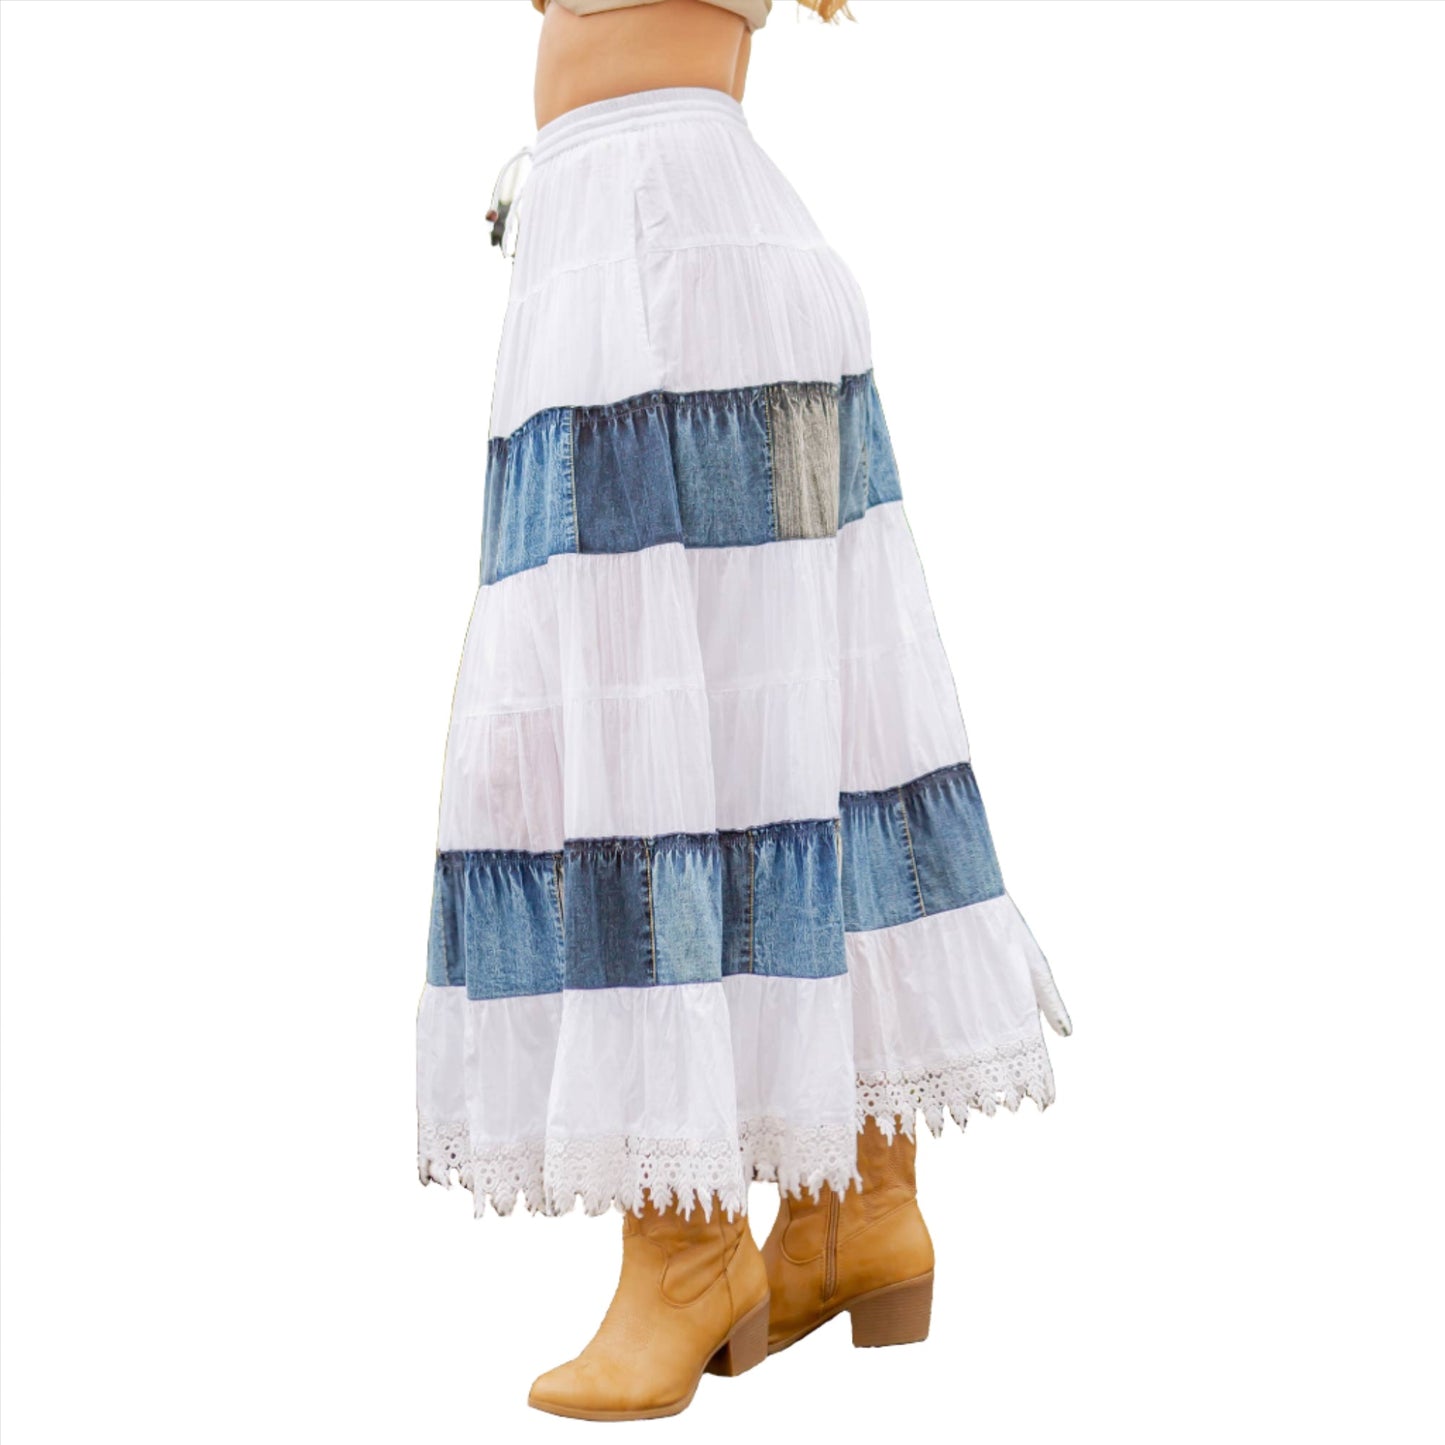 Jerra's Tiered Western Skirt